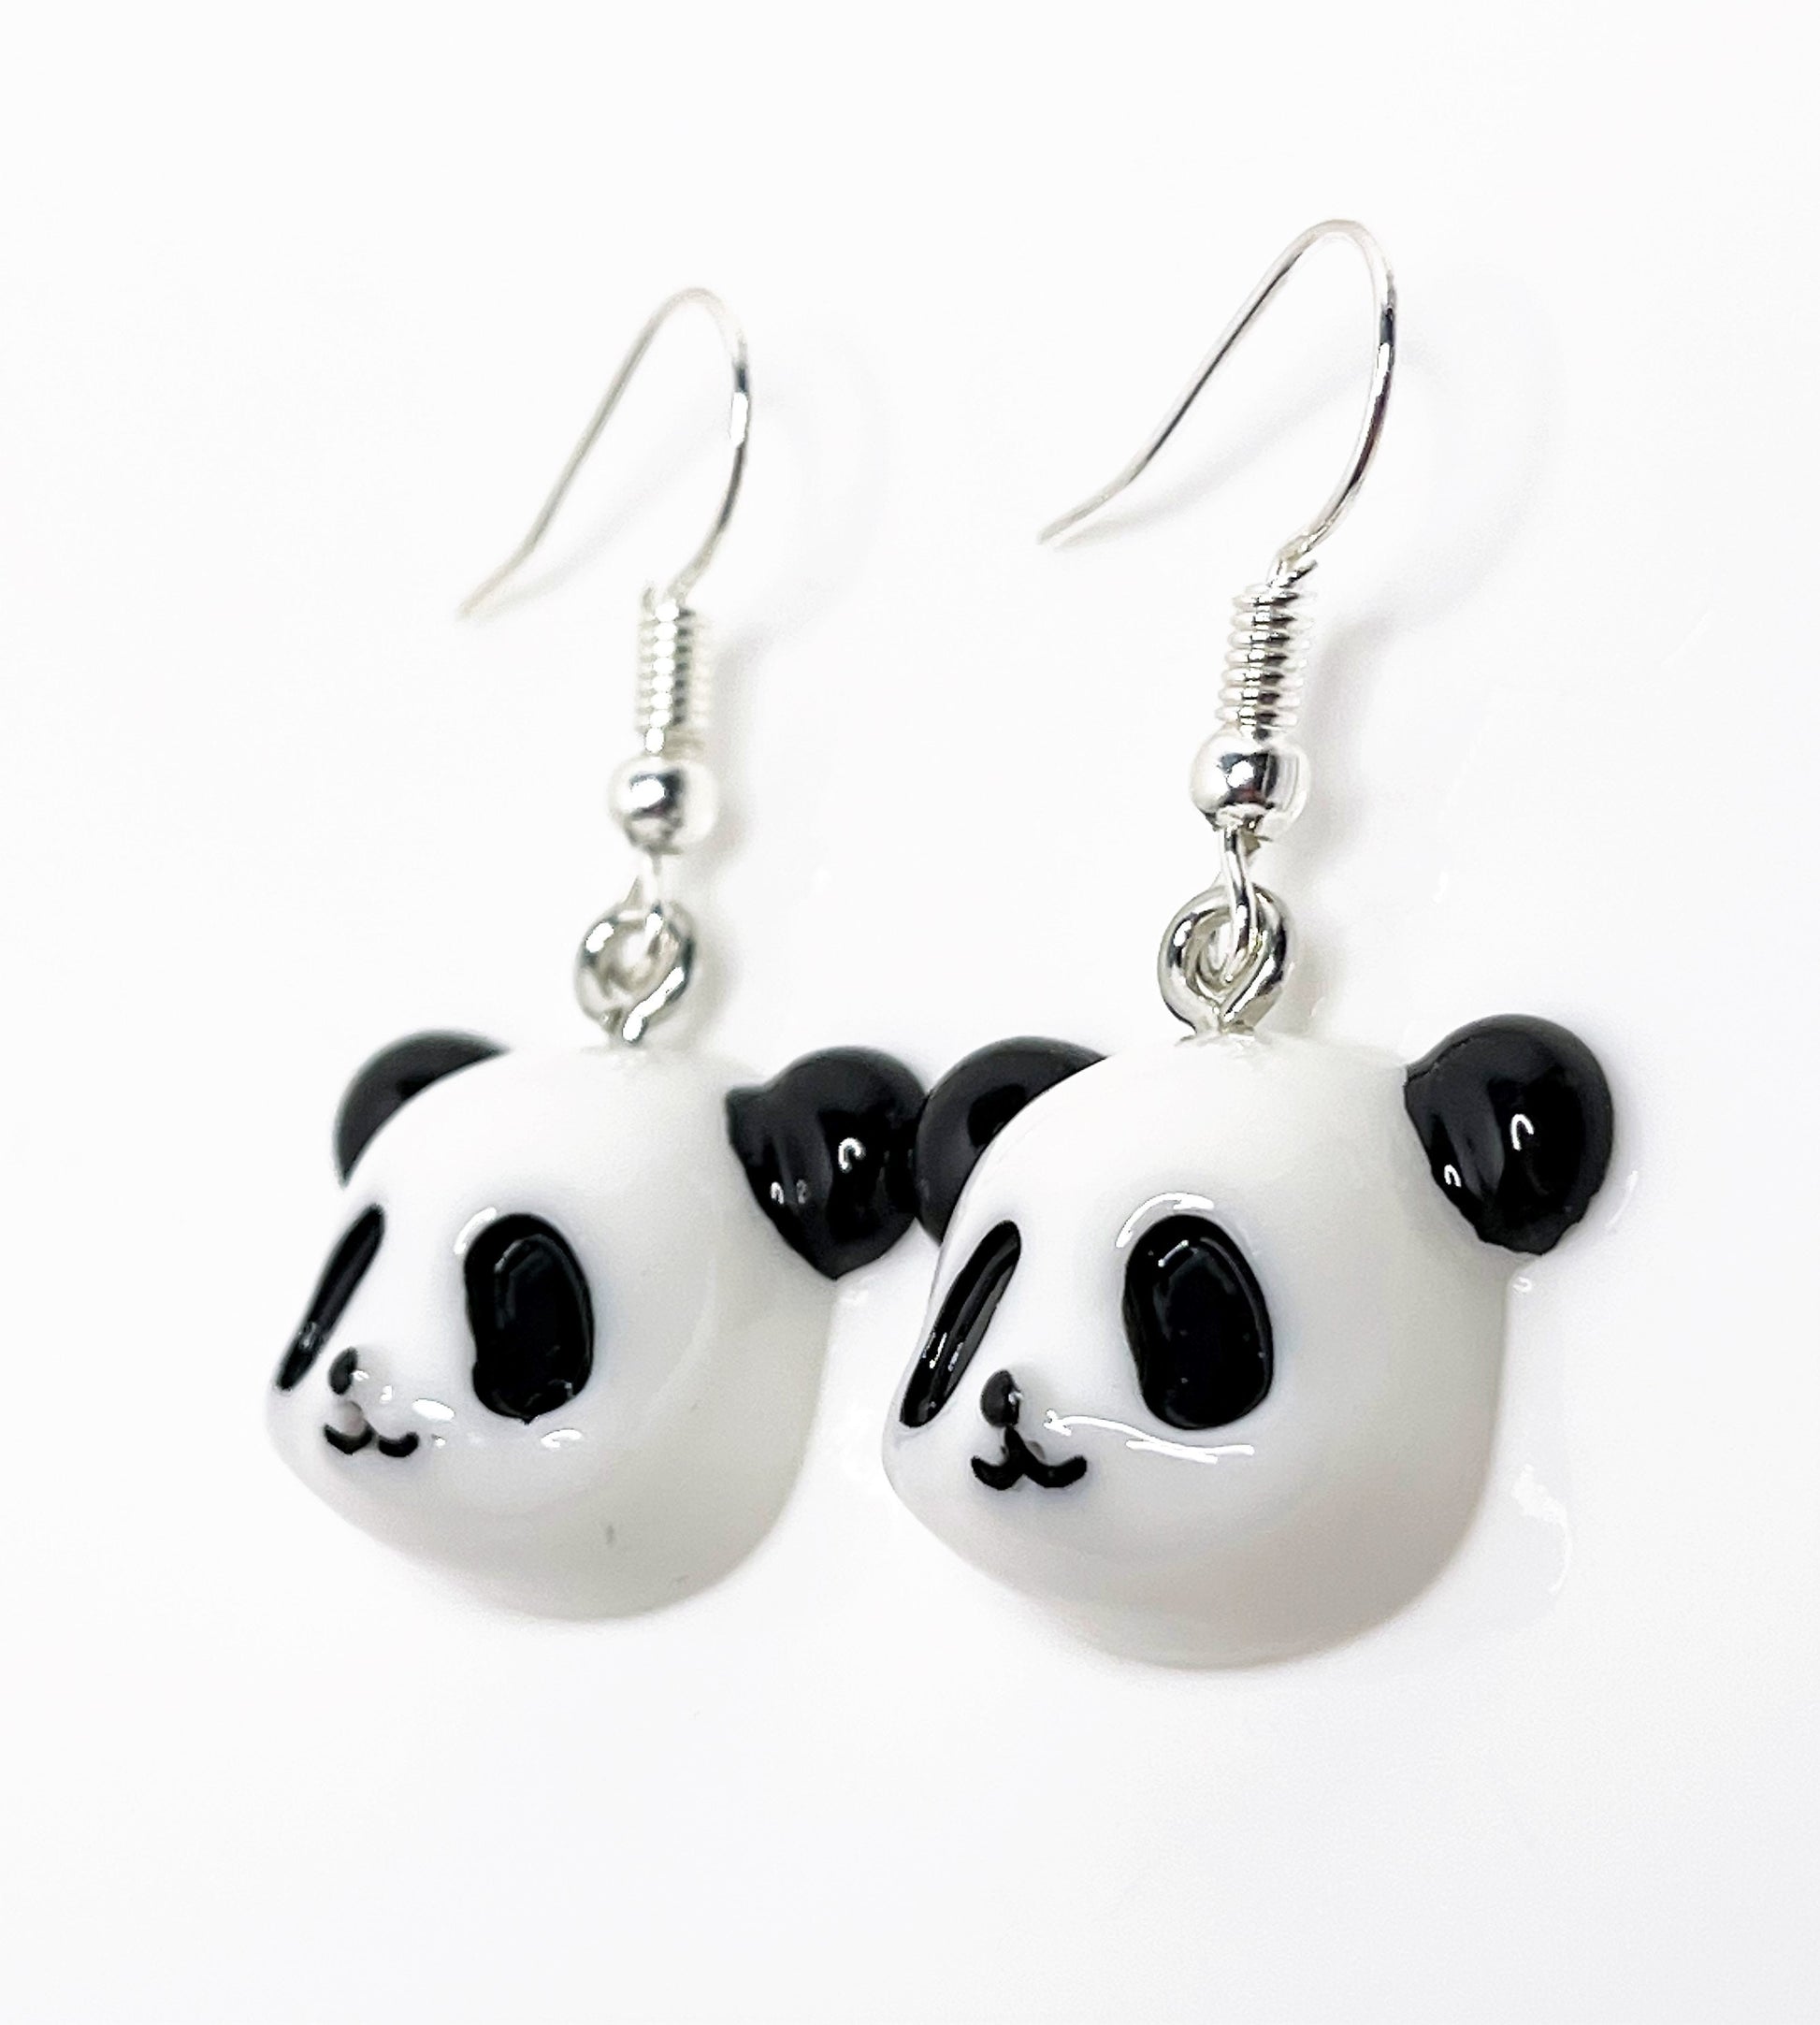 Cute Panda Face Earrings, Silver Plated, Sterling Silver, Black and White Panda Earrings, Earrings for Women, Panda Lovers, Novelty Drops